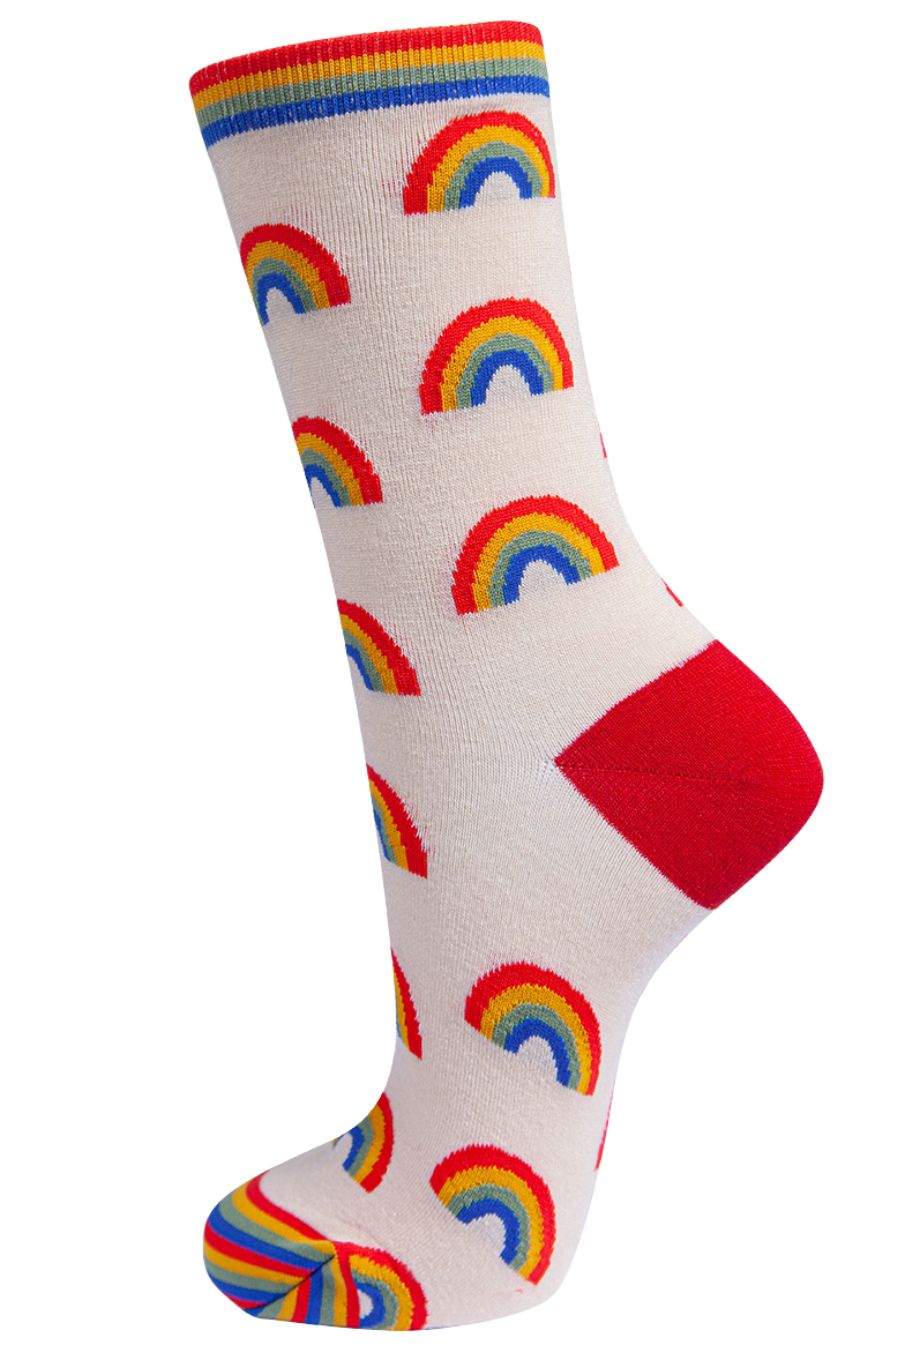 Sock Talk Womens Rainbow Bamboo Socks Novelty Ankle Socks UK 3-7 – Sock  Talk UK